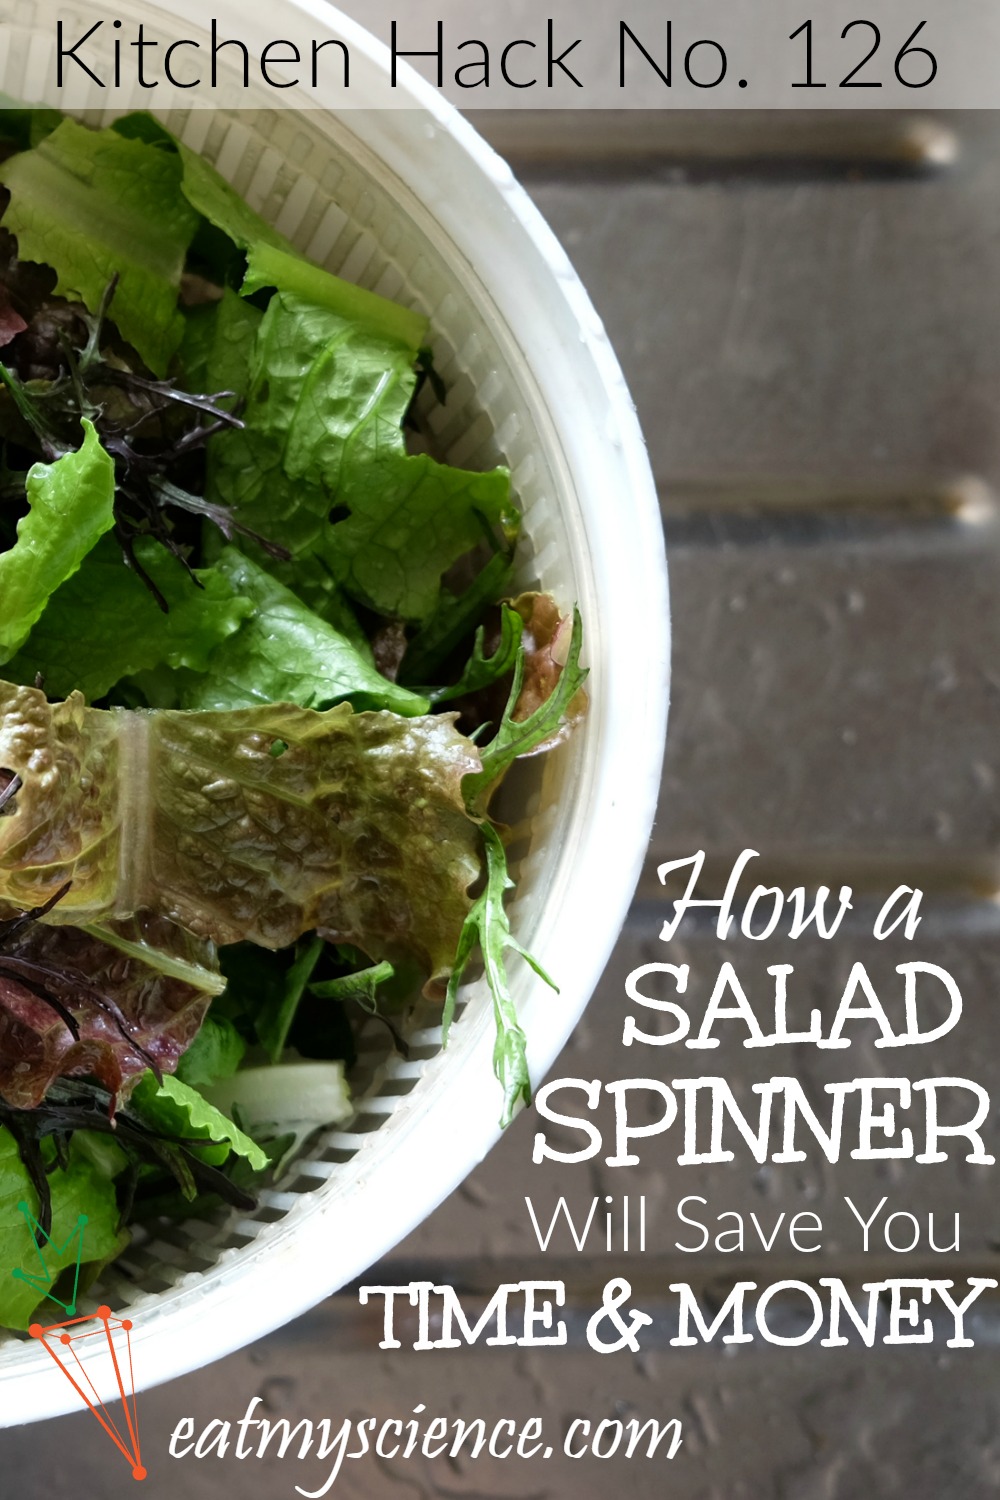 https://www.eatmyscience.com/wp-content/uploads/2016/05/Salad-Spinner-Pinterest.jpg